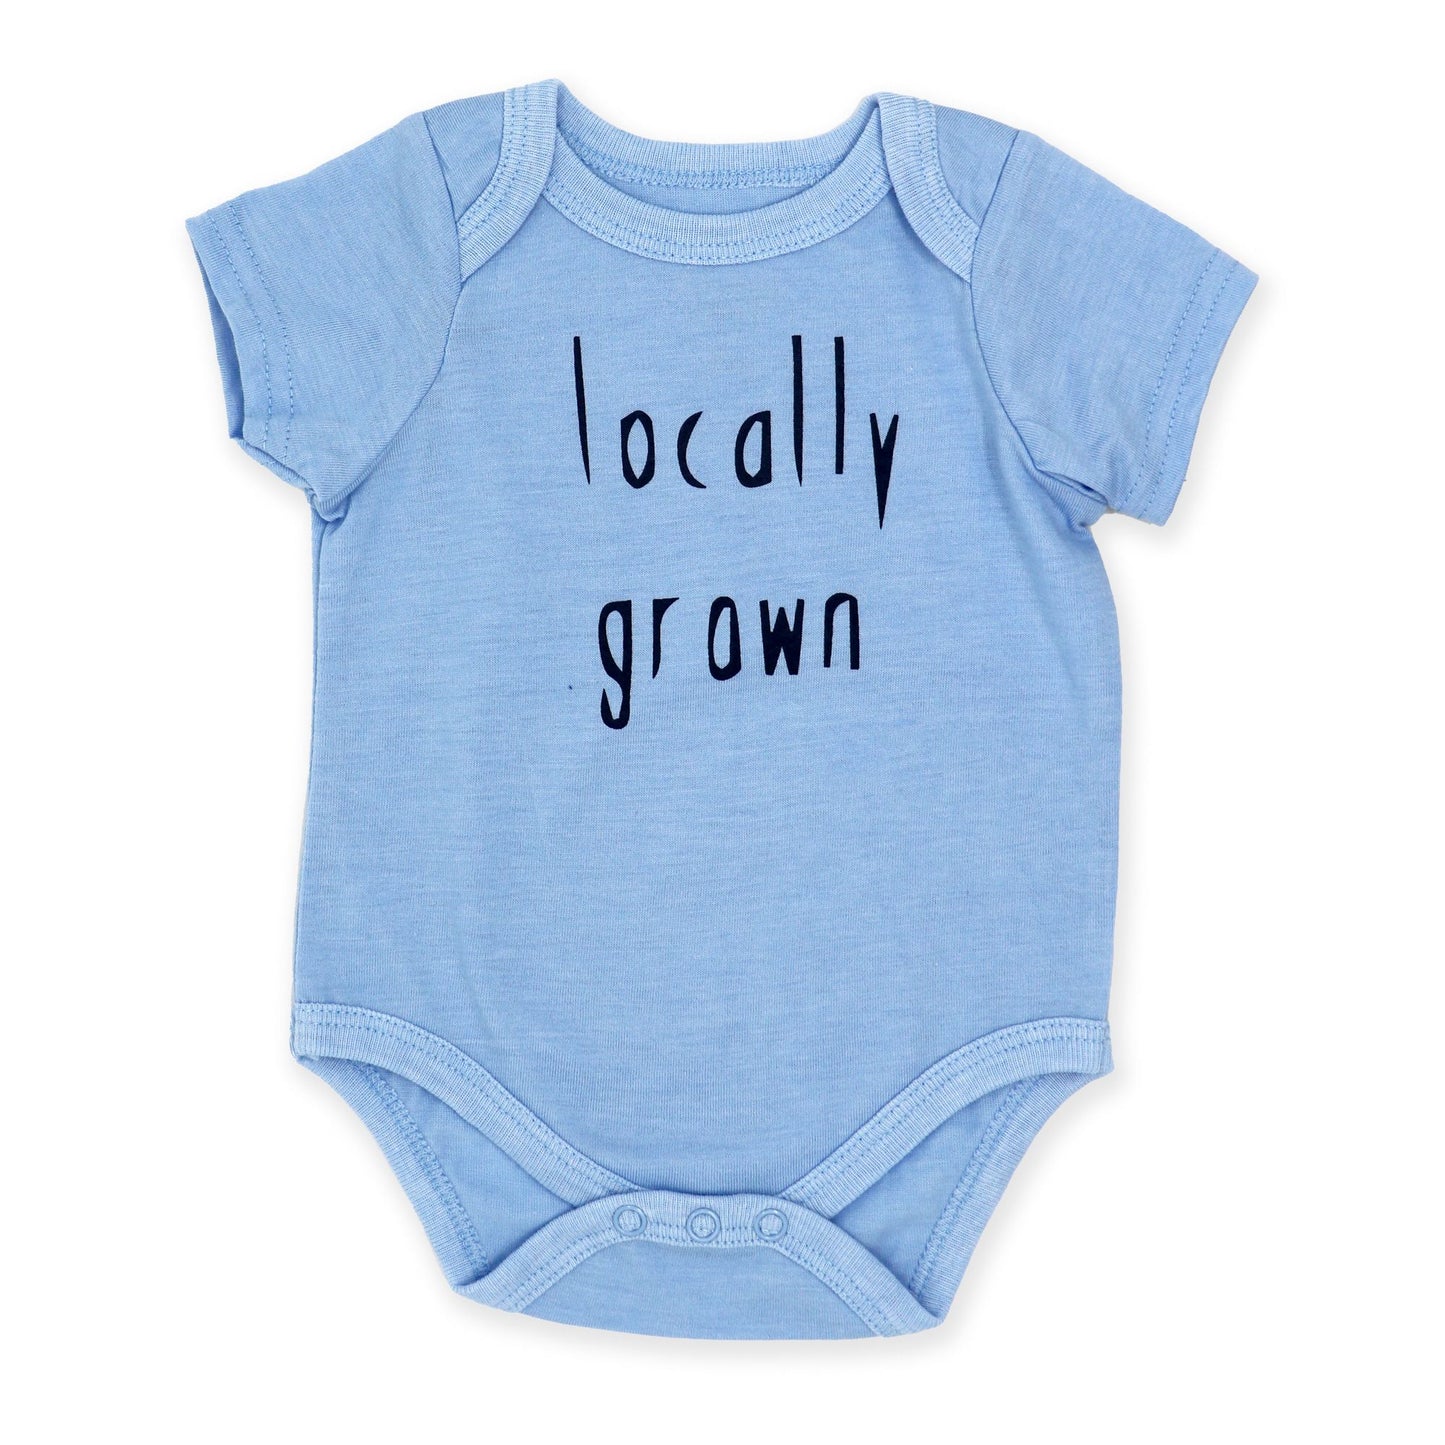 Baby Boy's Bodysuit Set - Locally Grown